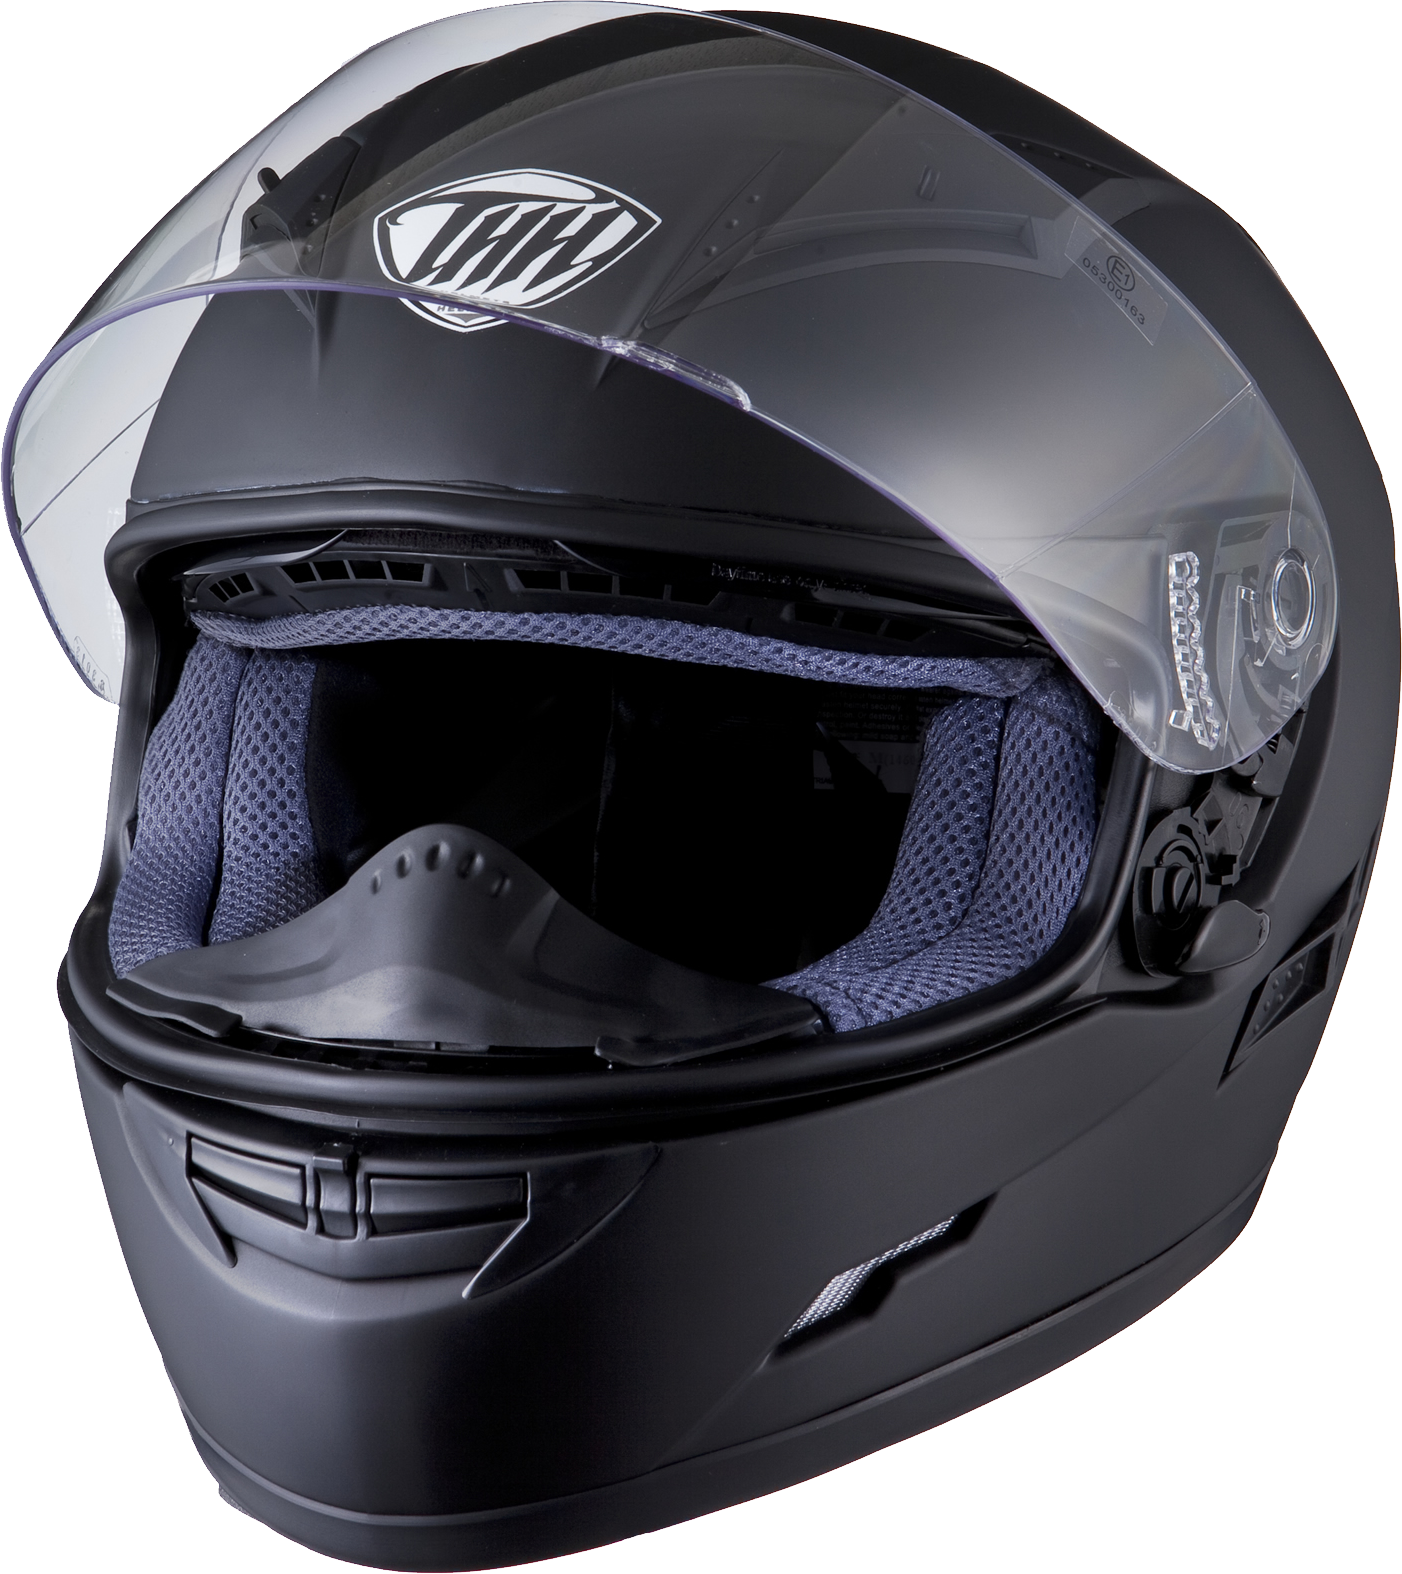 Motorcycle Helmet Png - Motorcycle Helmet Png Image, Moto Helmet, Transparent background PNG HD thumbnail